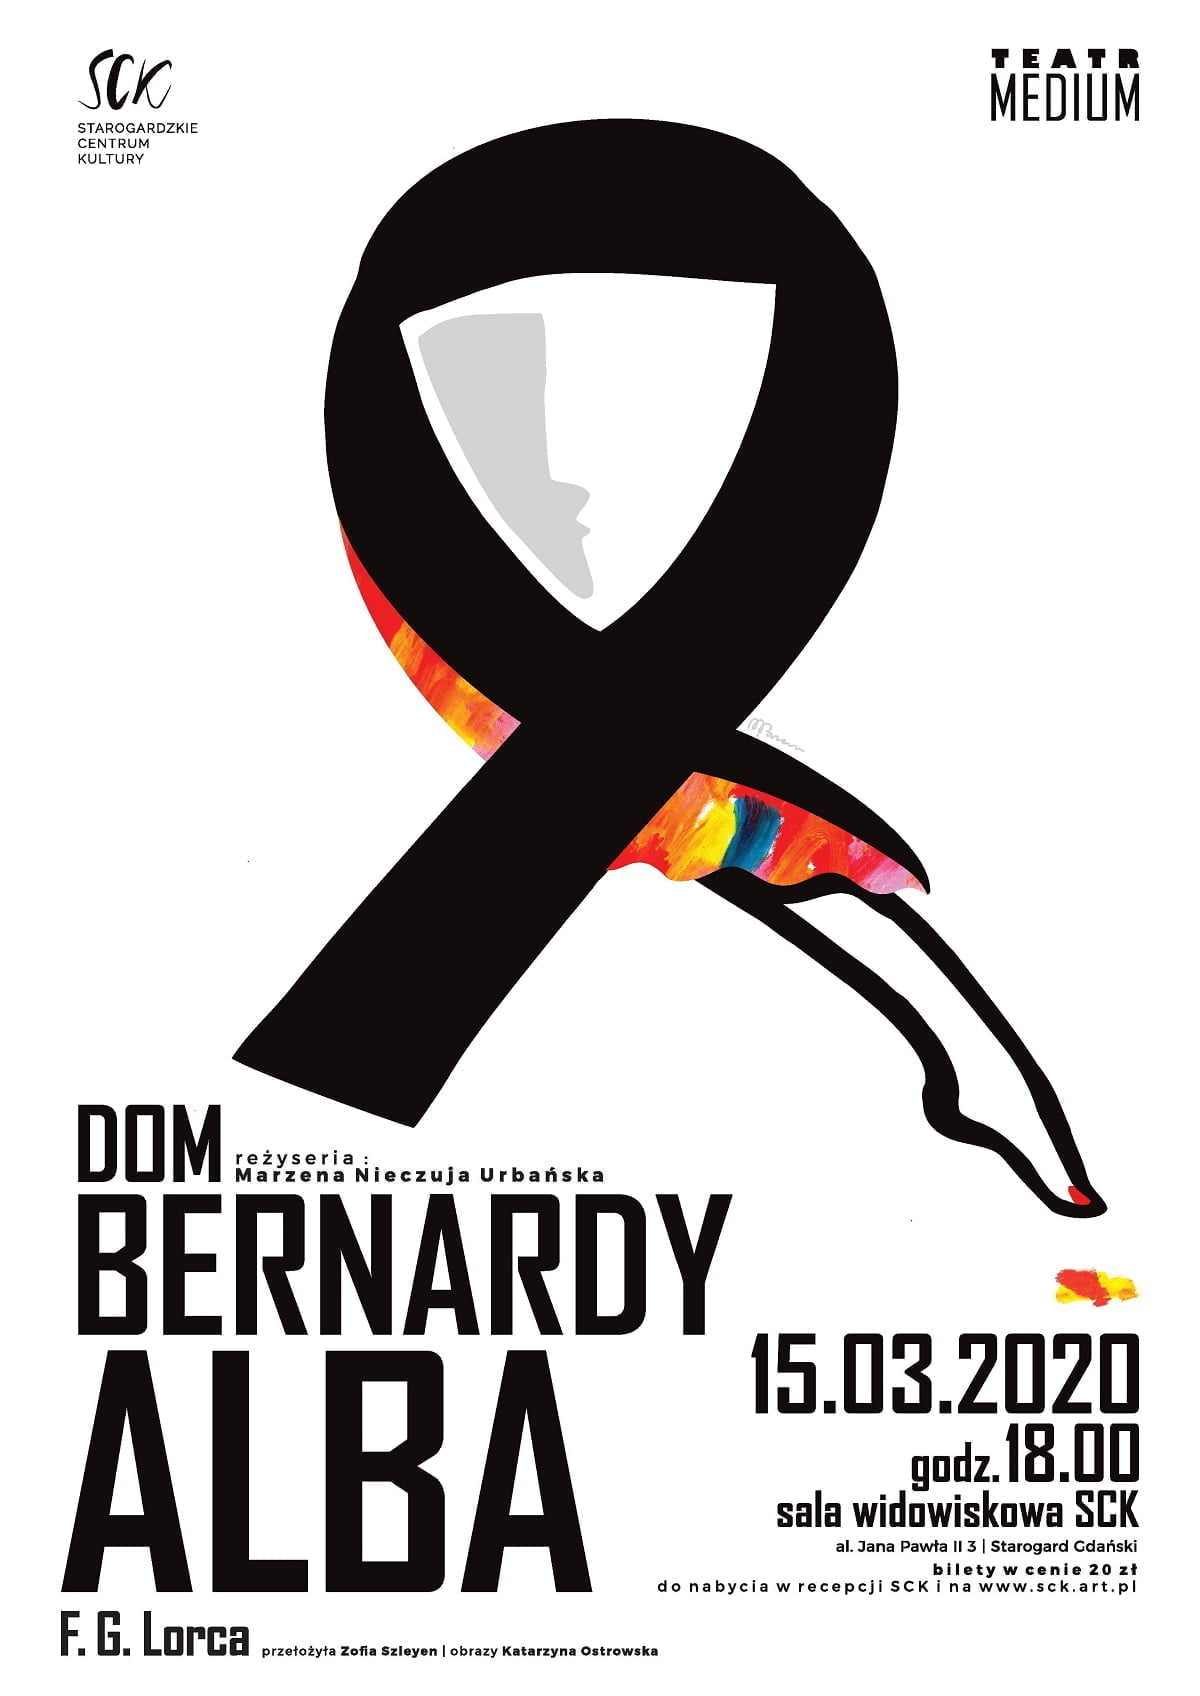 Teatr Medium - "Dom Bernardy Alba"